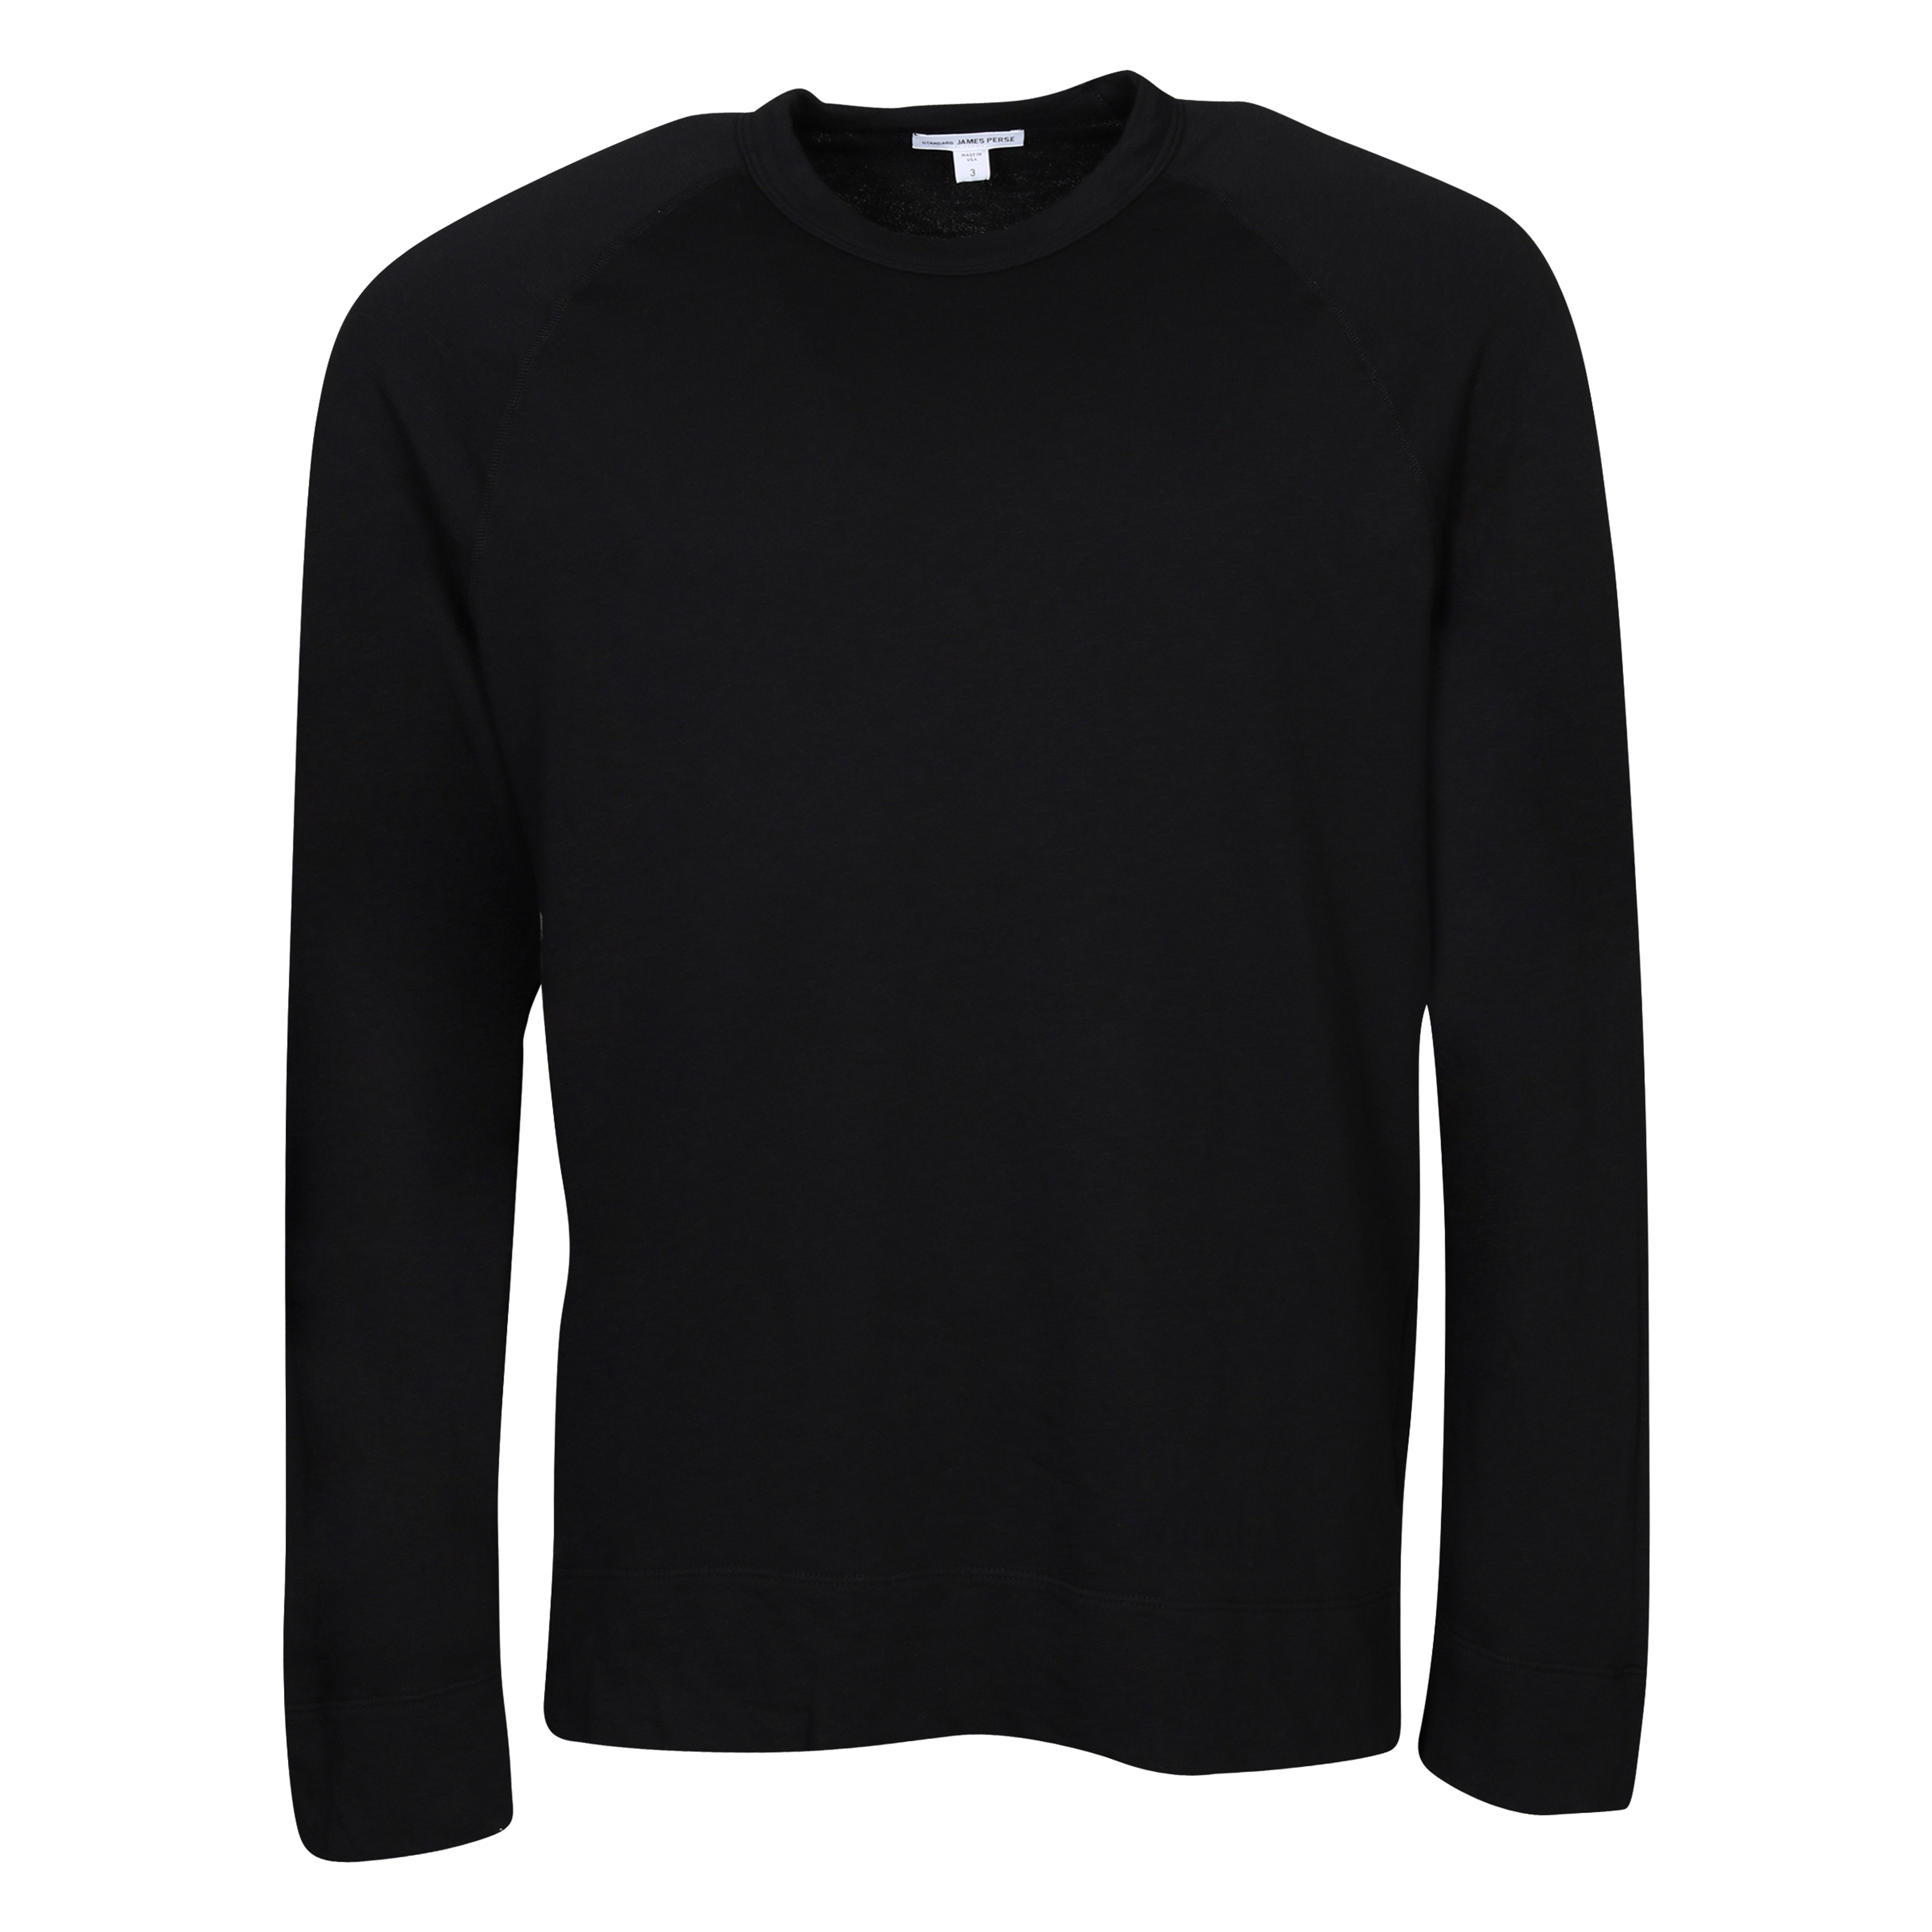 James Perse Vintage Cotton Raglan Sweater in Black